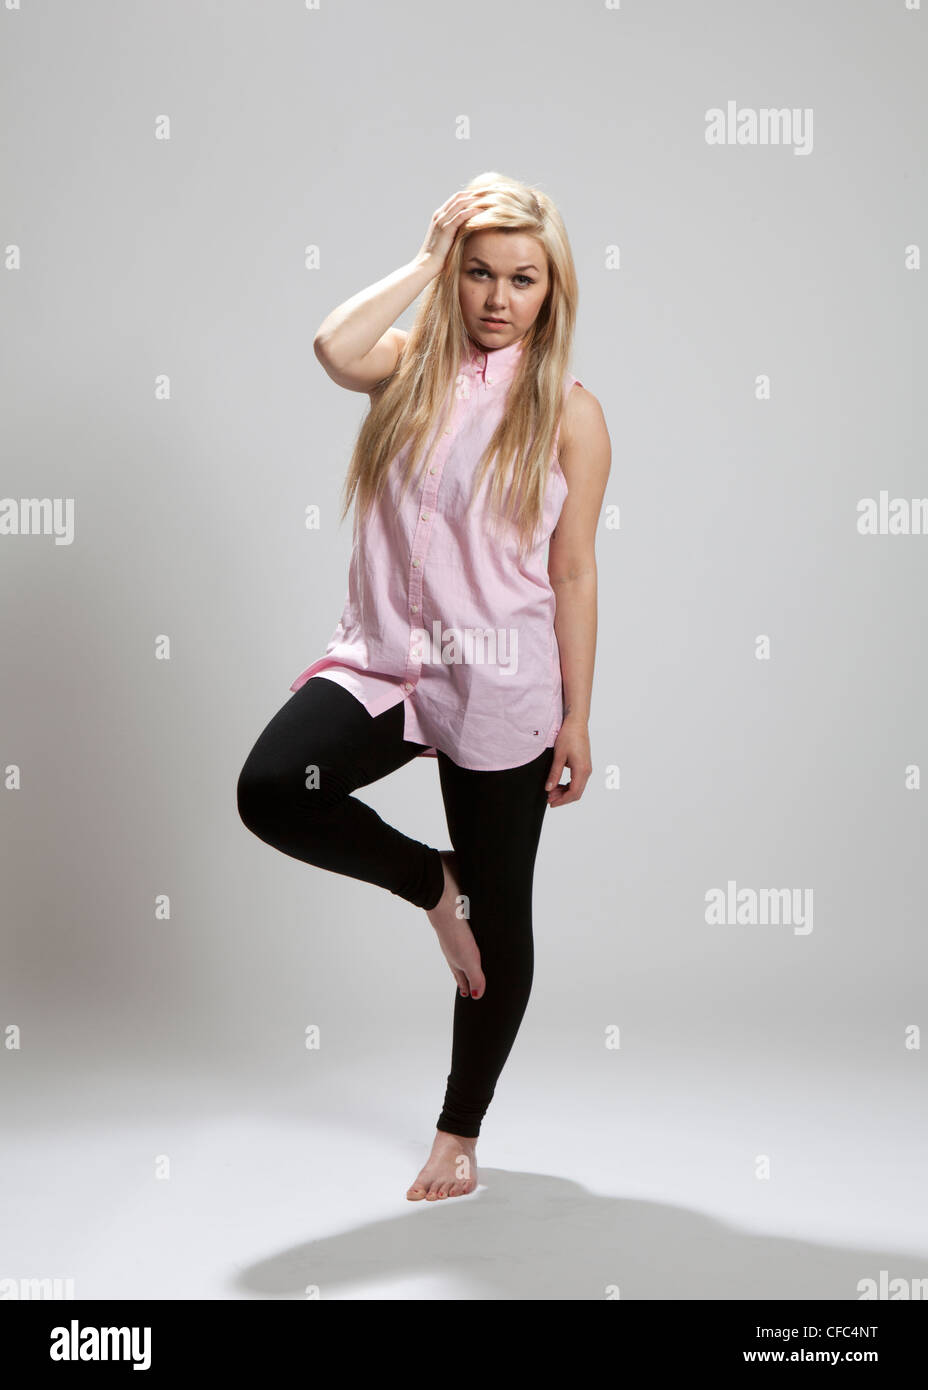 https://c8.alamy.com/comp/CFC4NT/full-length-colour-studio-portrait-female-wearing-pink-shirt-and-black-CFC4NT.jpg